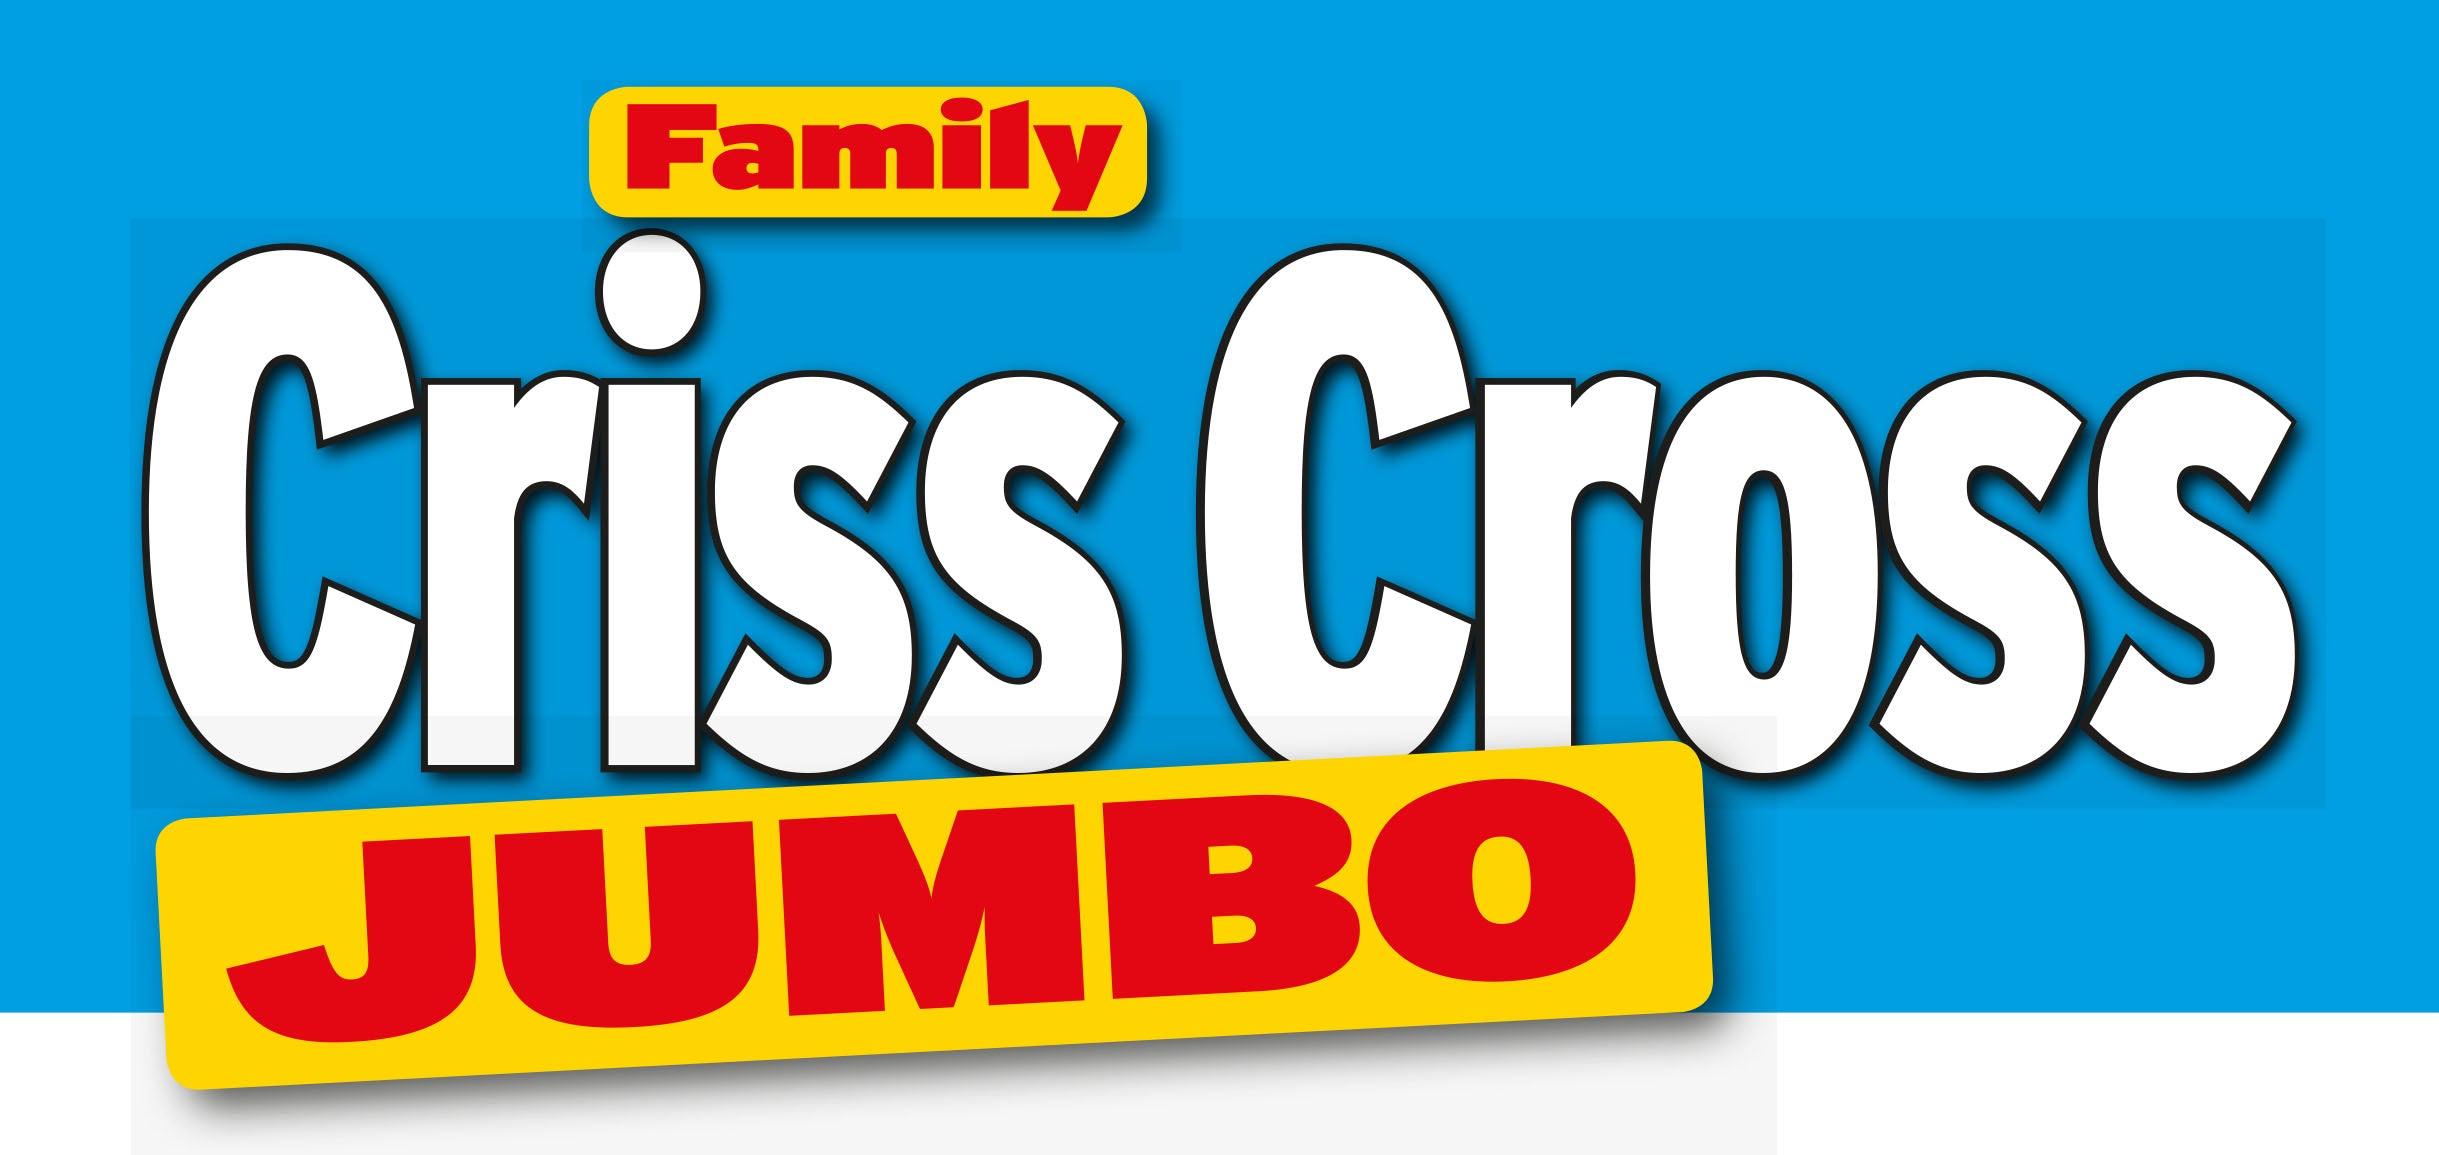 Family Criss Cross Jumbo - Agenda Bookshop